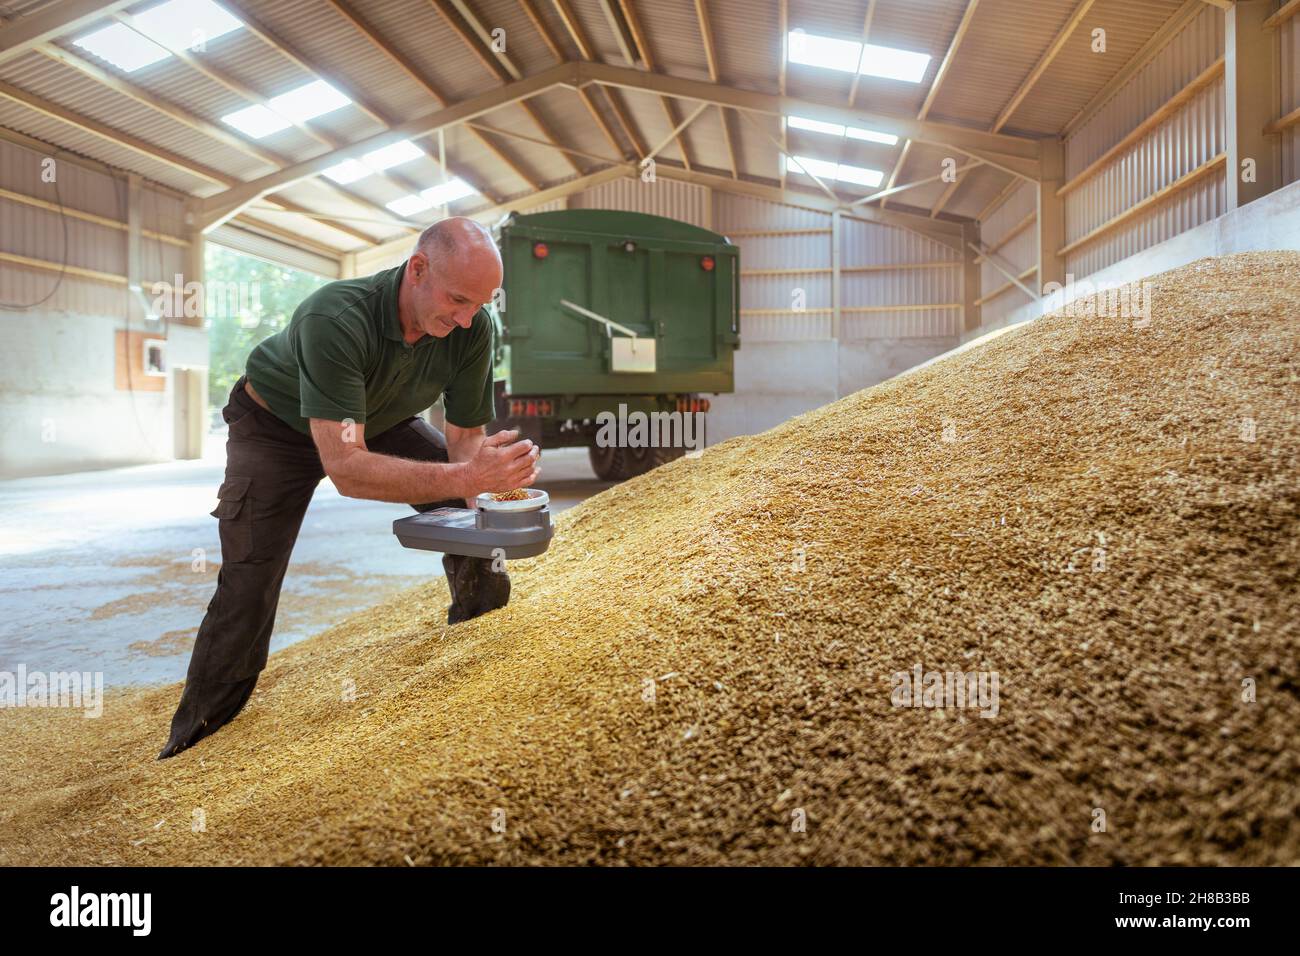 Farmer in barn weighing freshly harvested grain Stock Photo